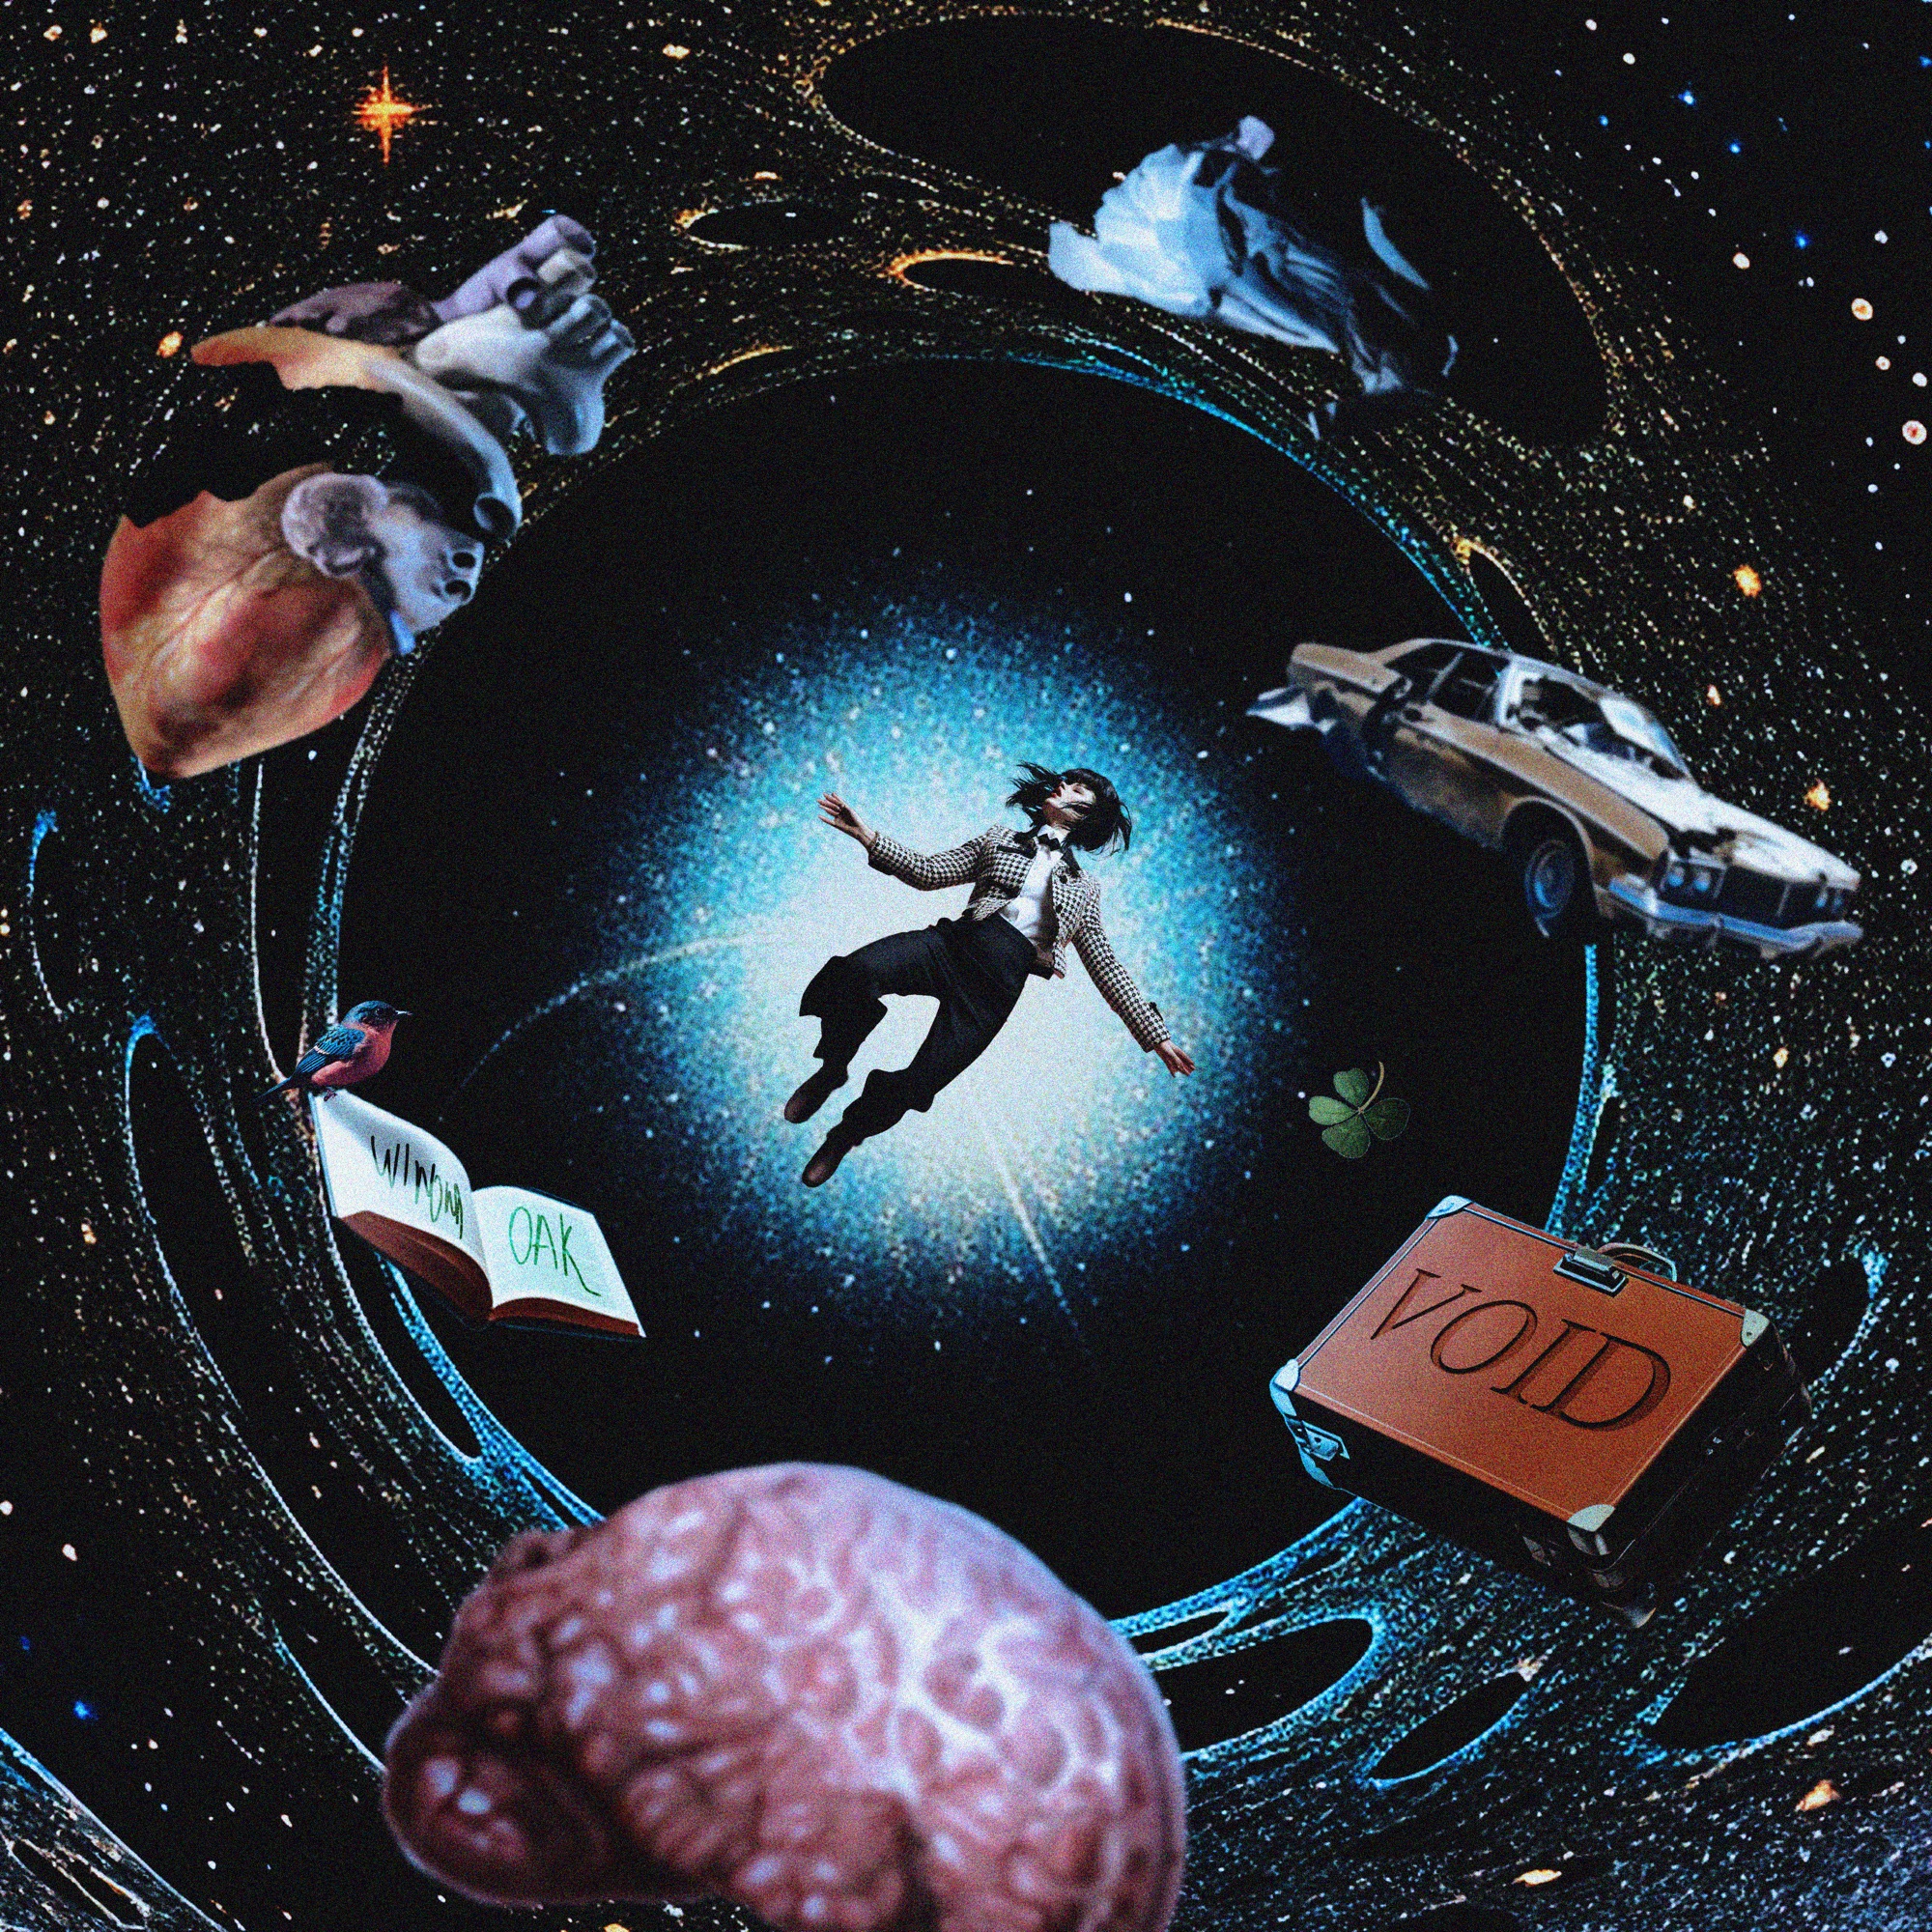 Winona Oak & Boy In Space — Inside Out cover artwork